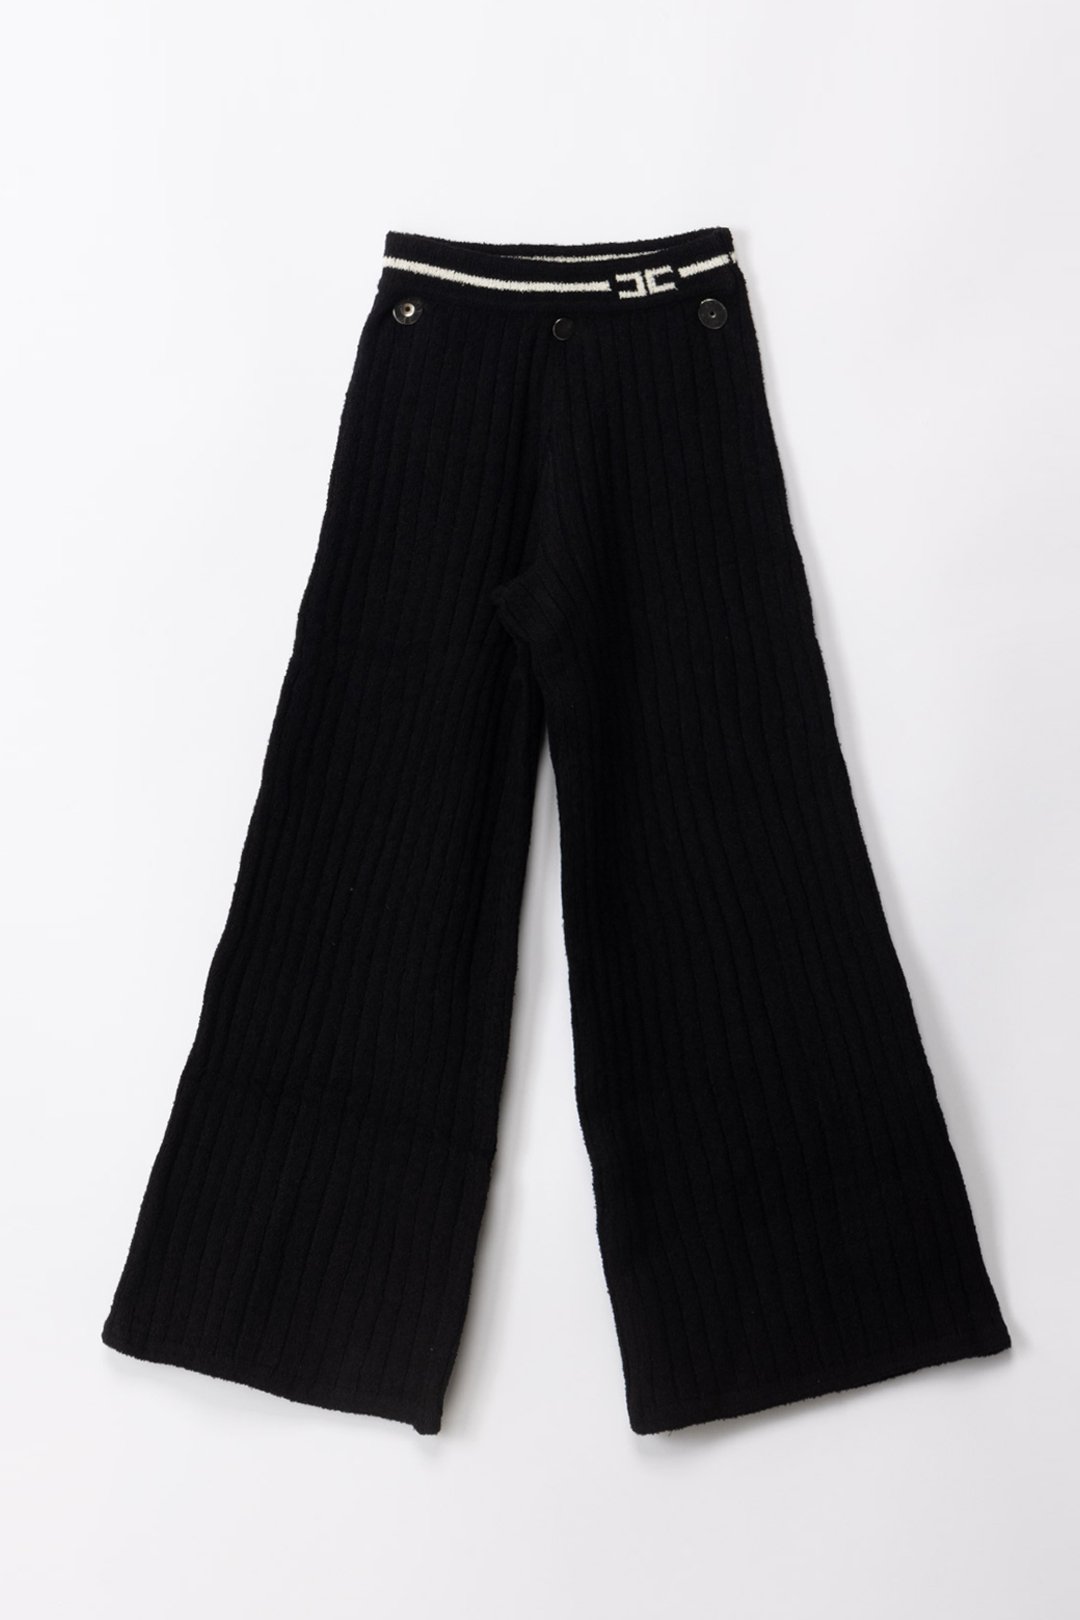 Elisabetta Franchi La Mia Bambina wide-leg fringed trousers - Black